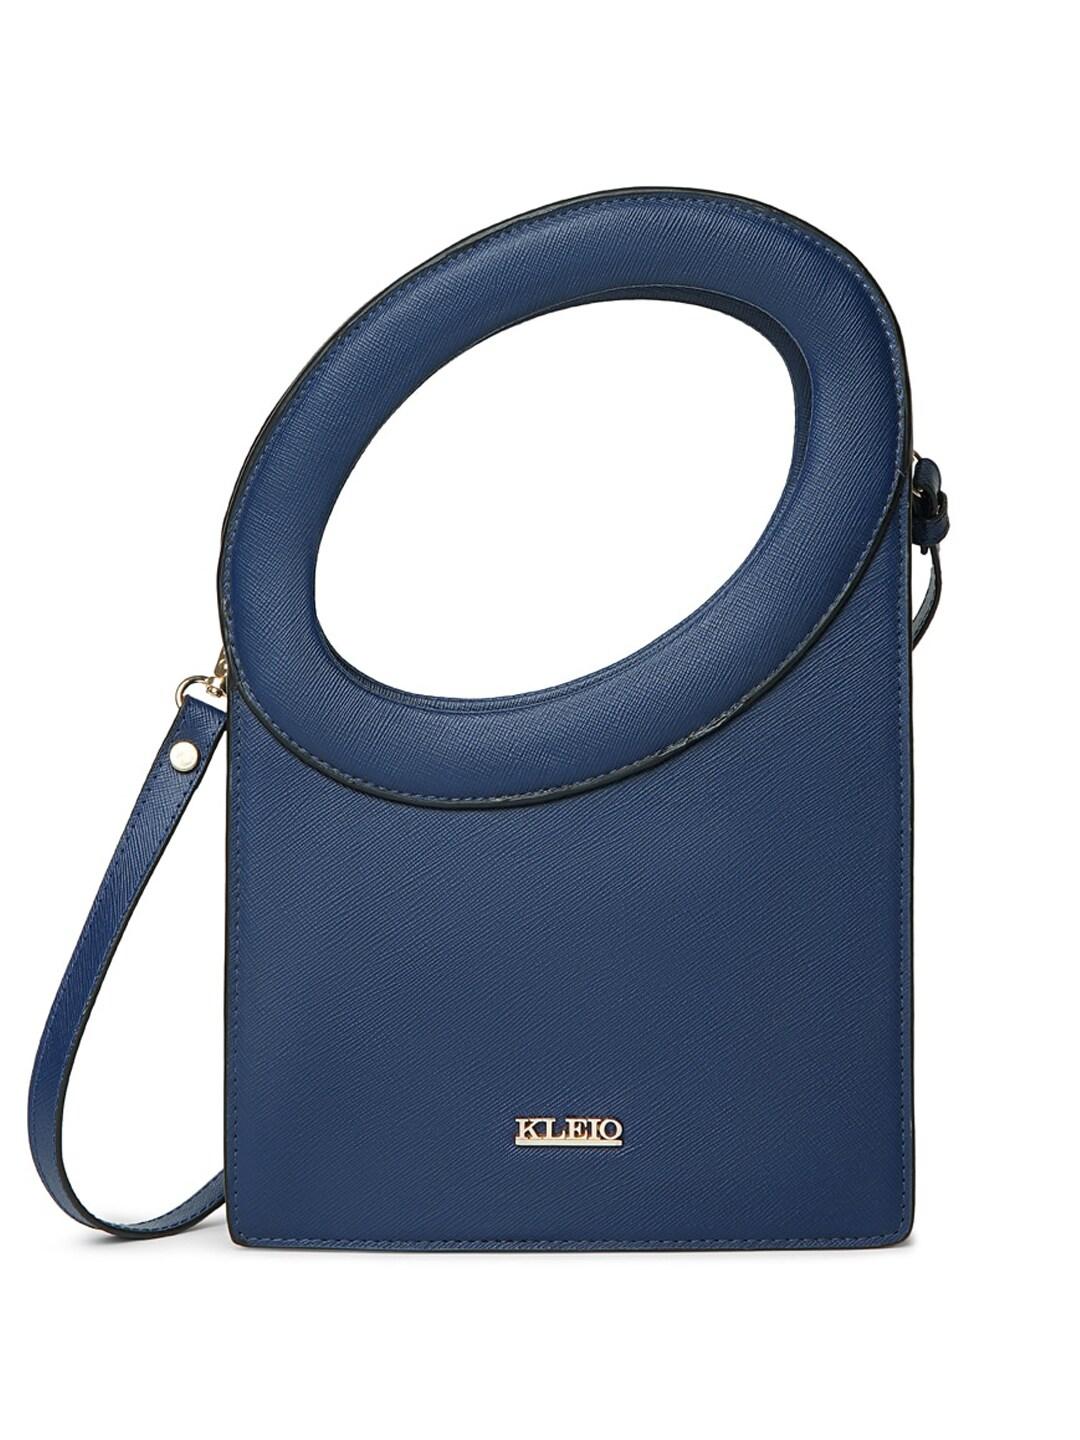 kleio structured handheld bag